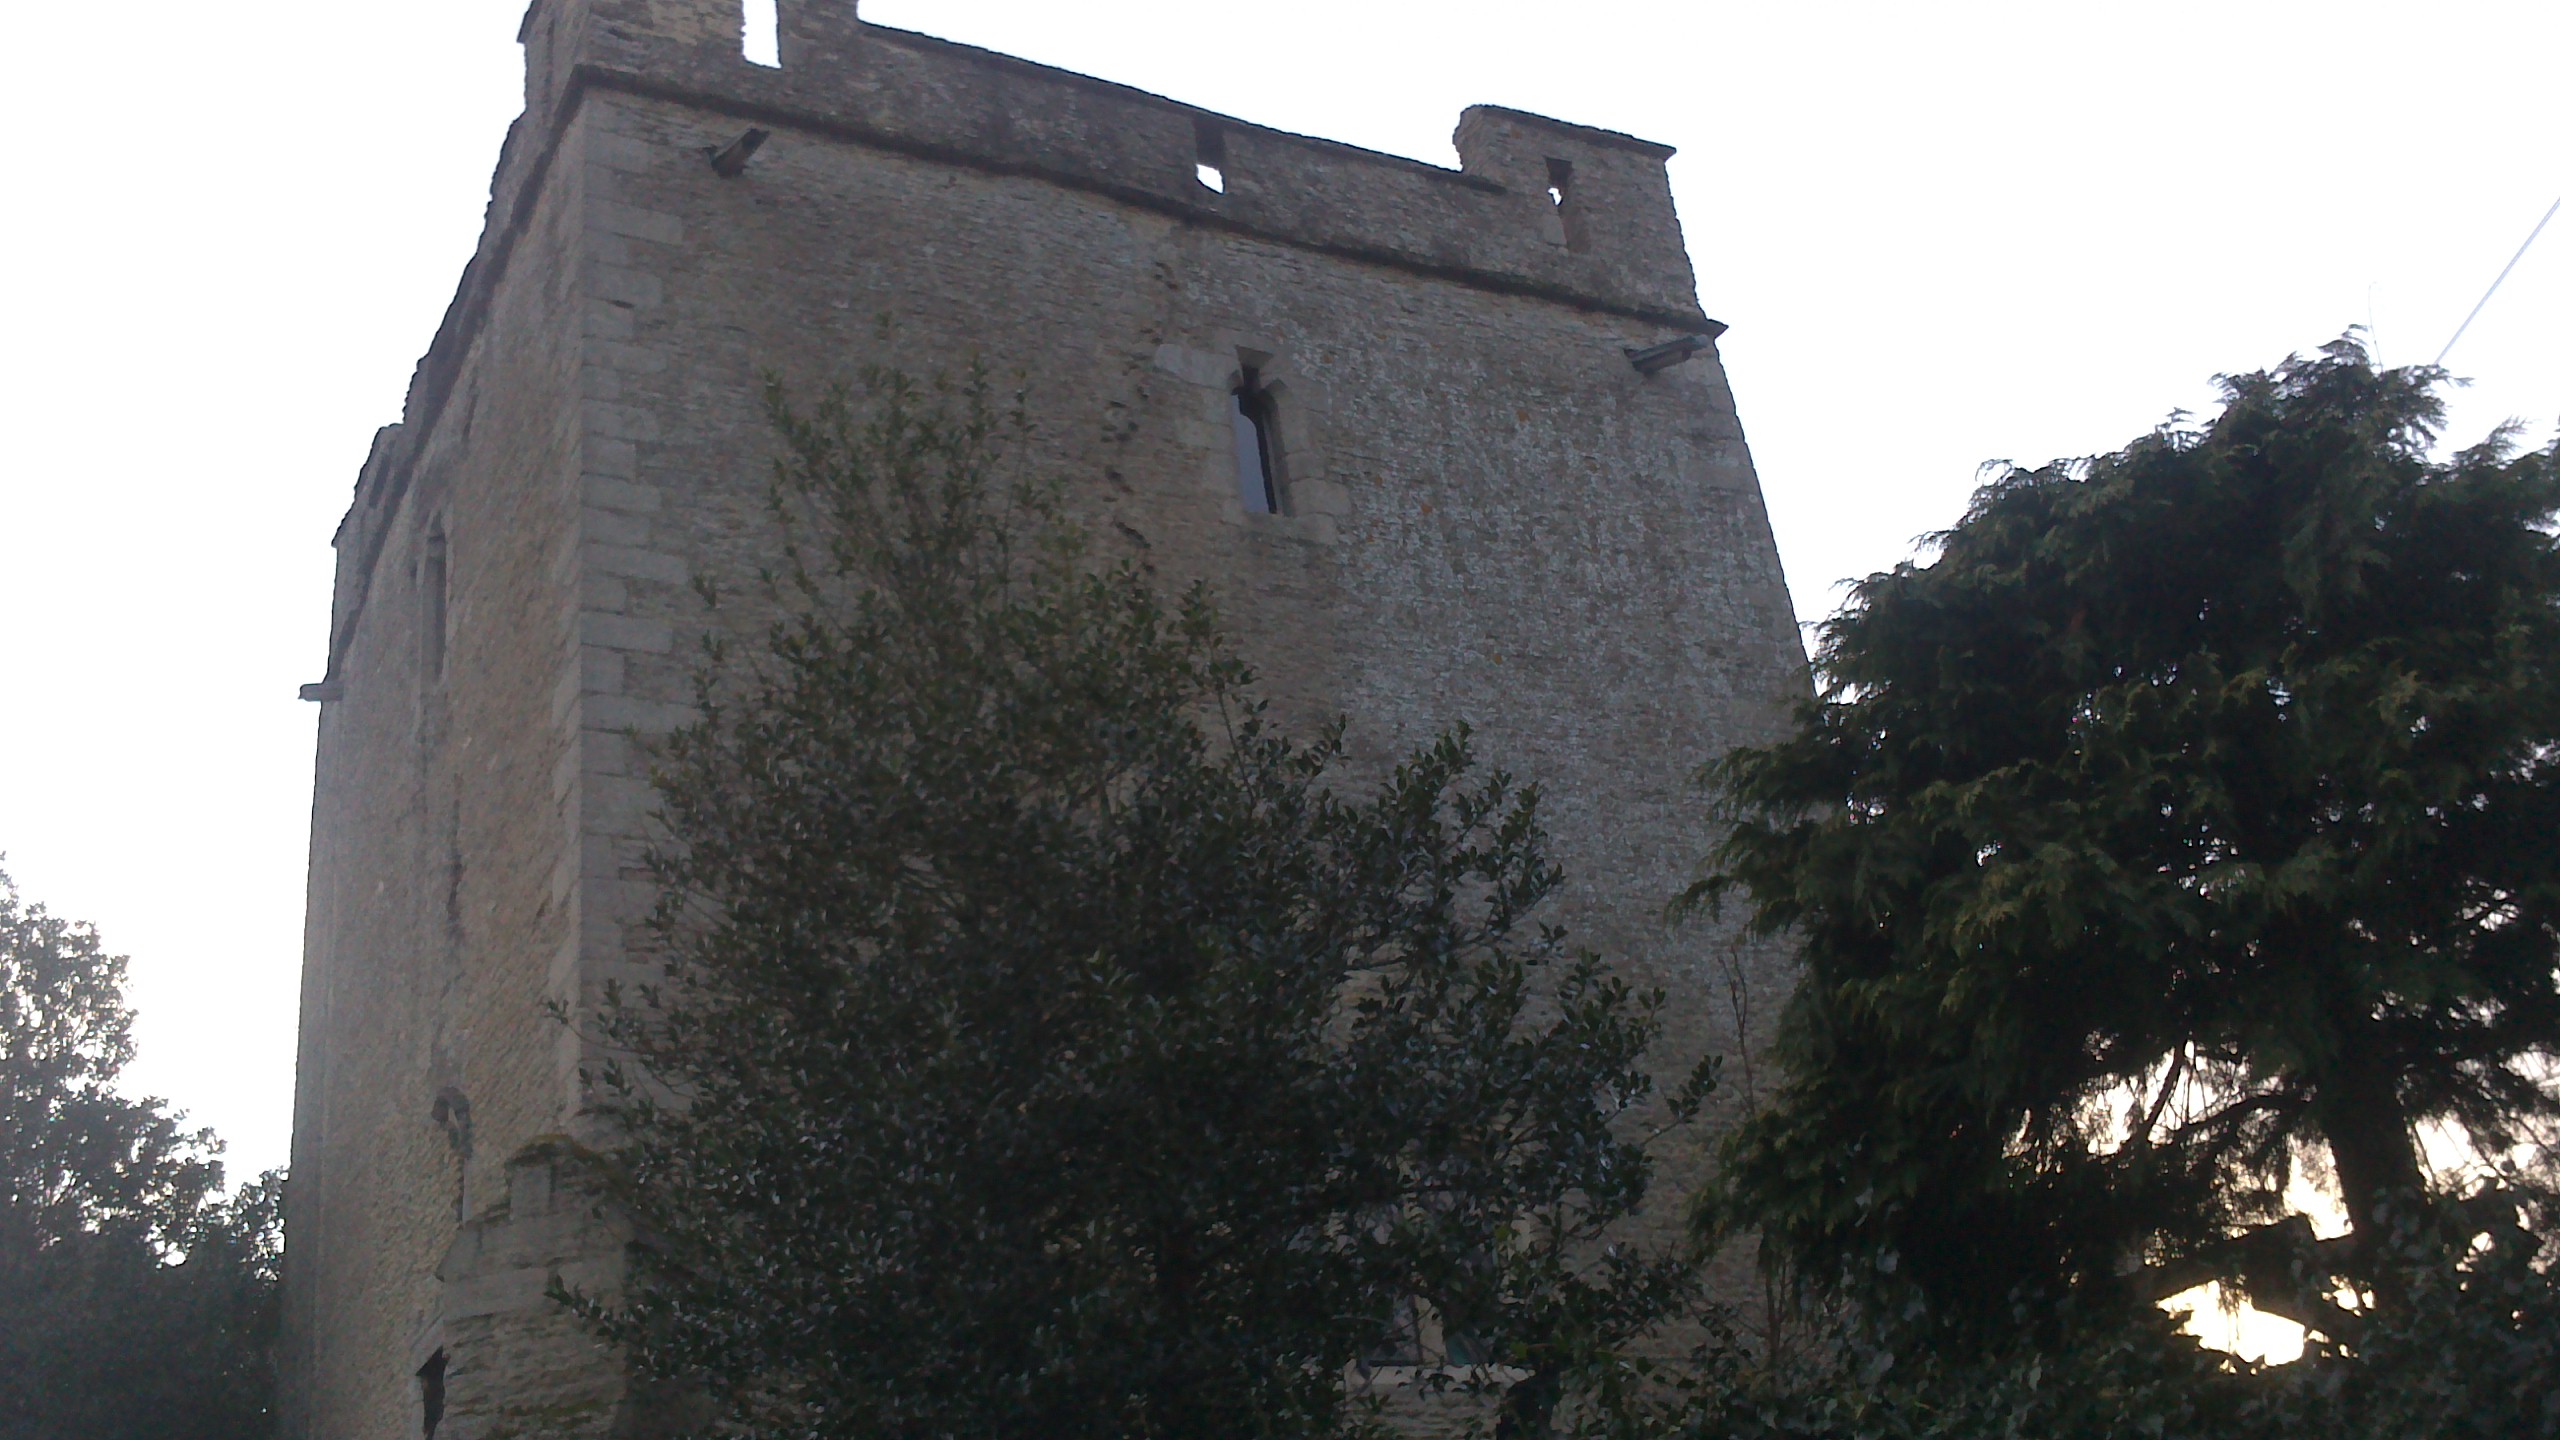 Tower exterior